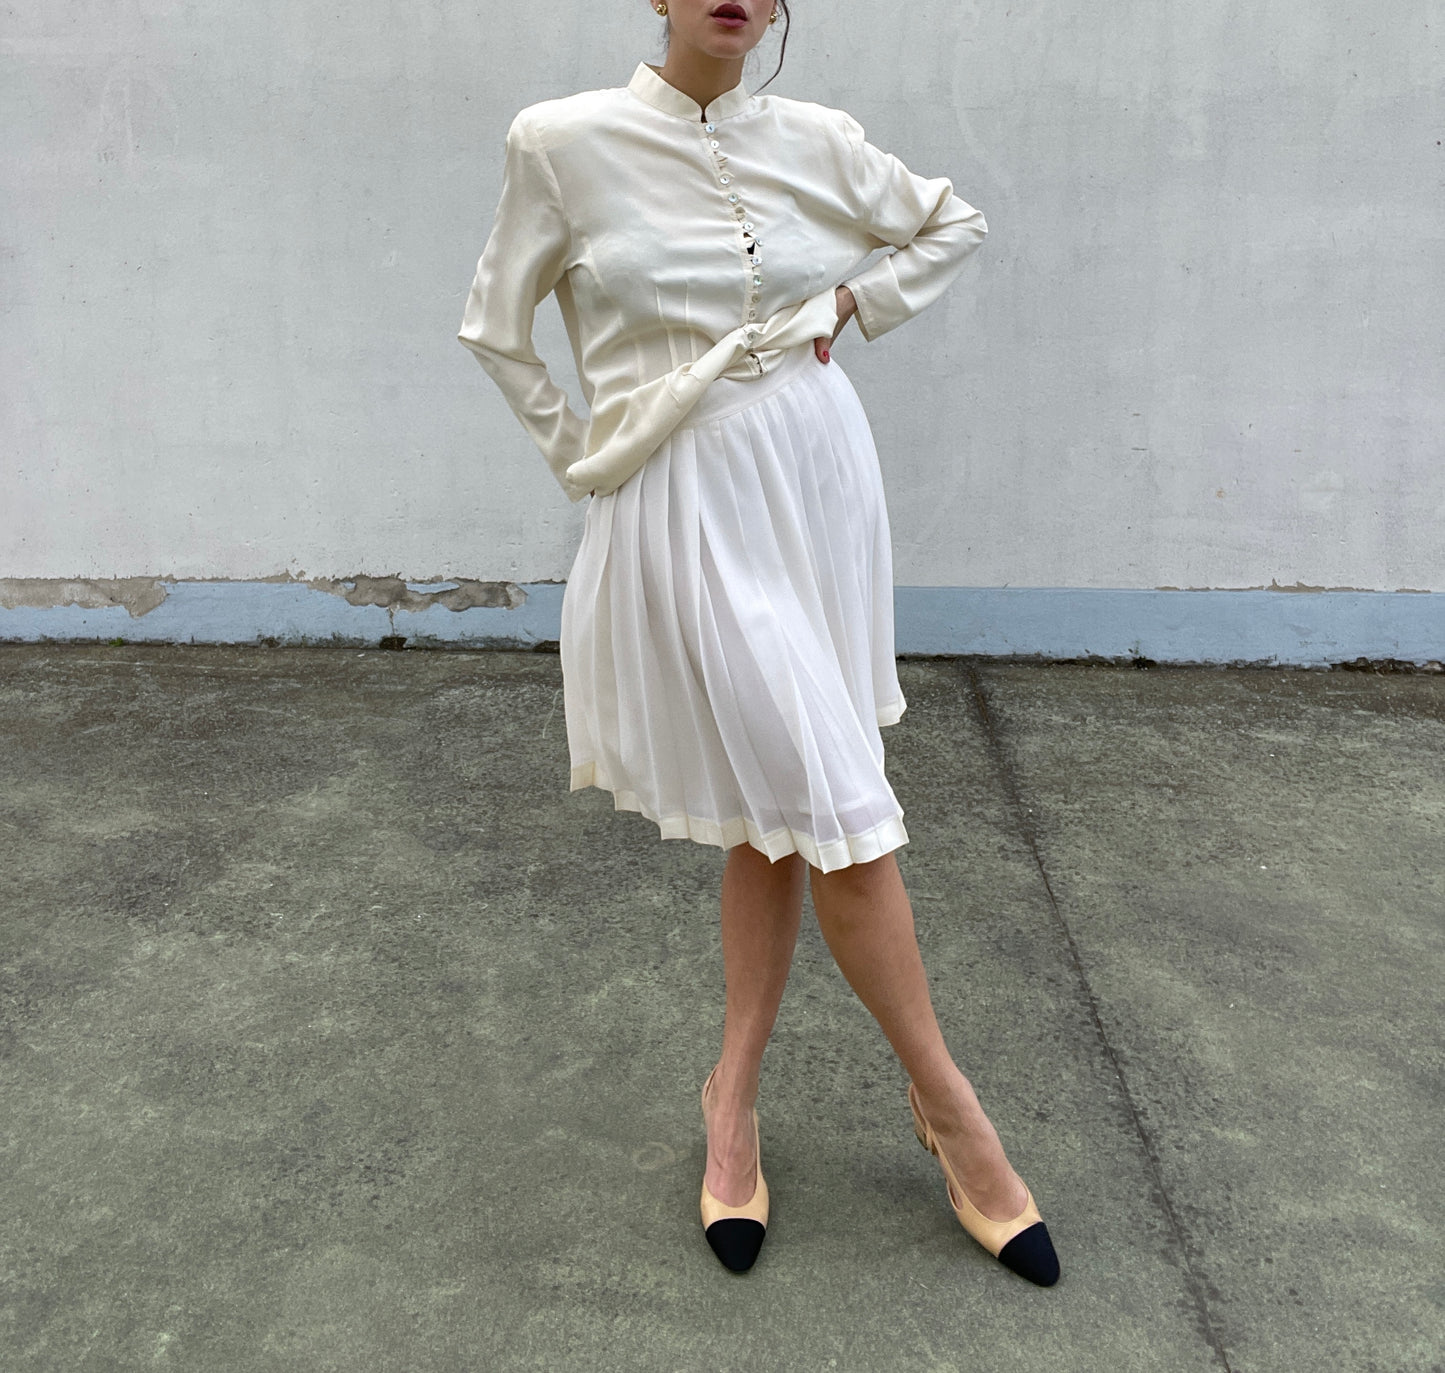 Dream white skirt by Genny